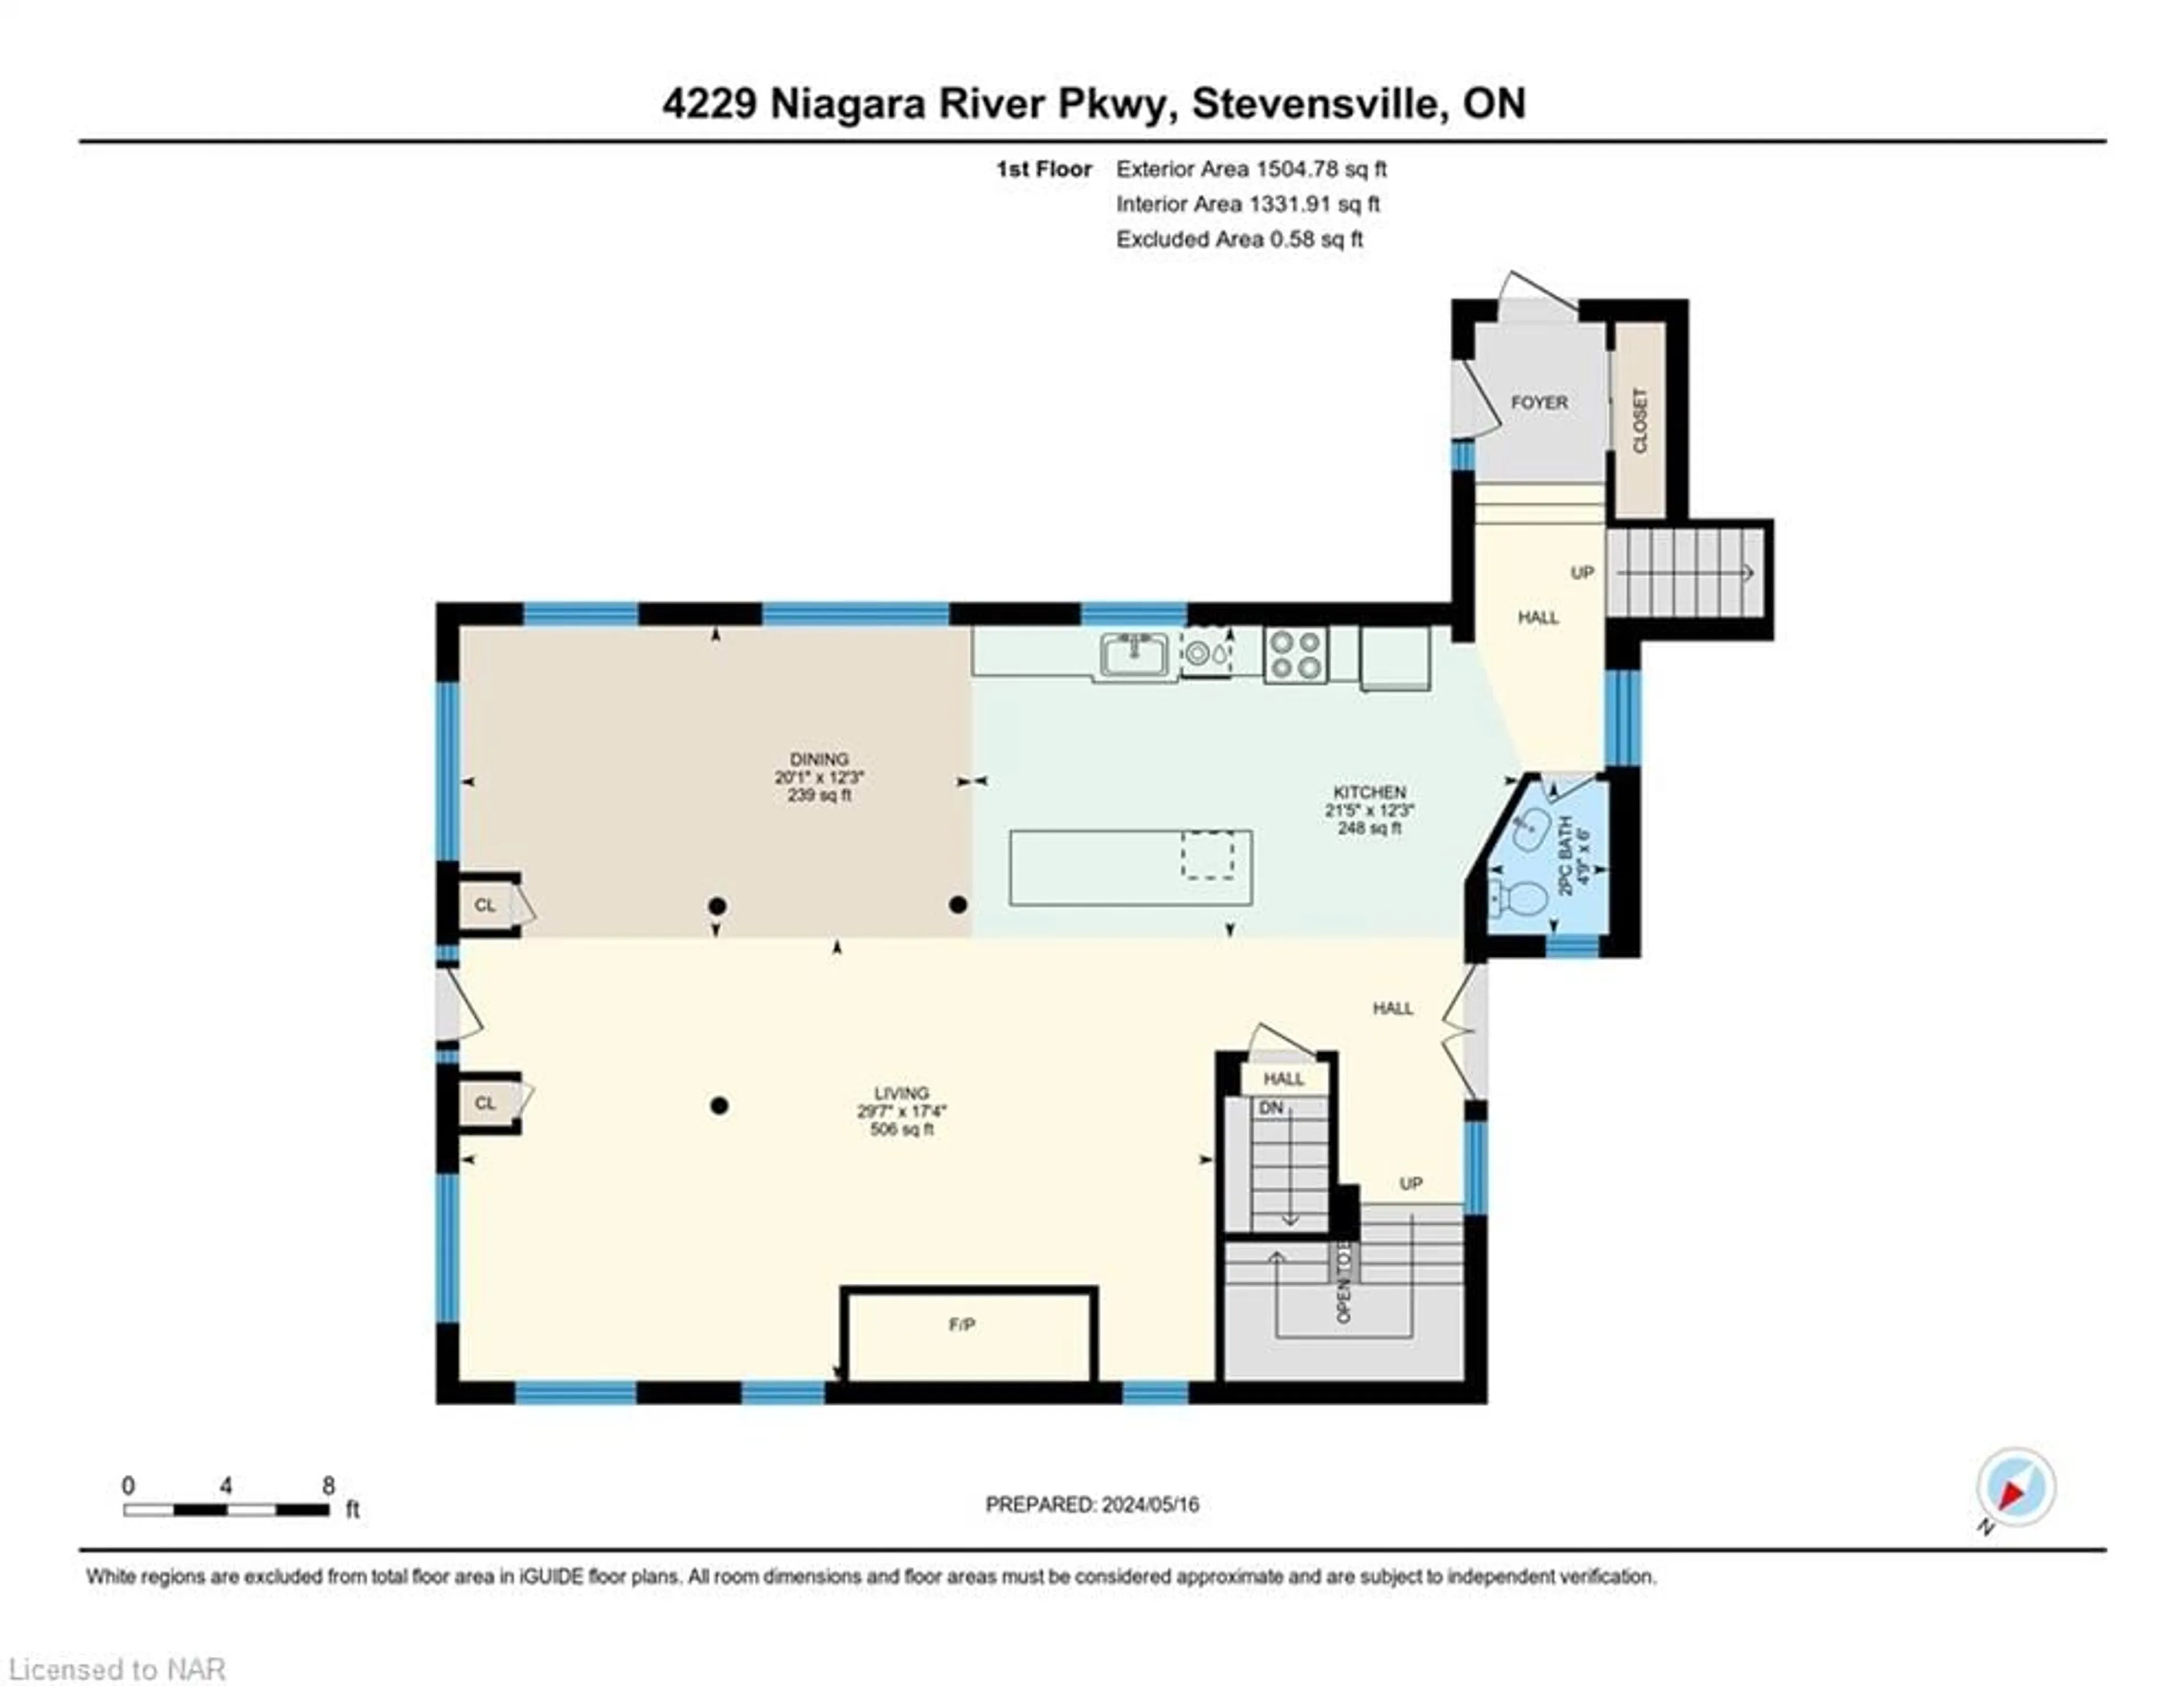 Floor plan for 4229 Niagara Blvd, Stevensville Ontario L0S 1S0